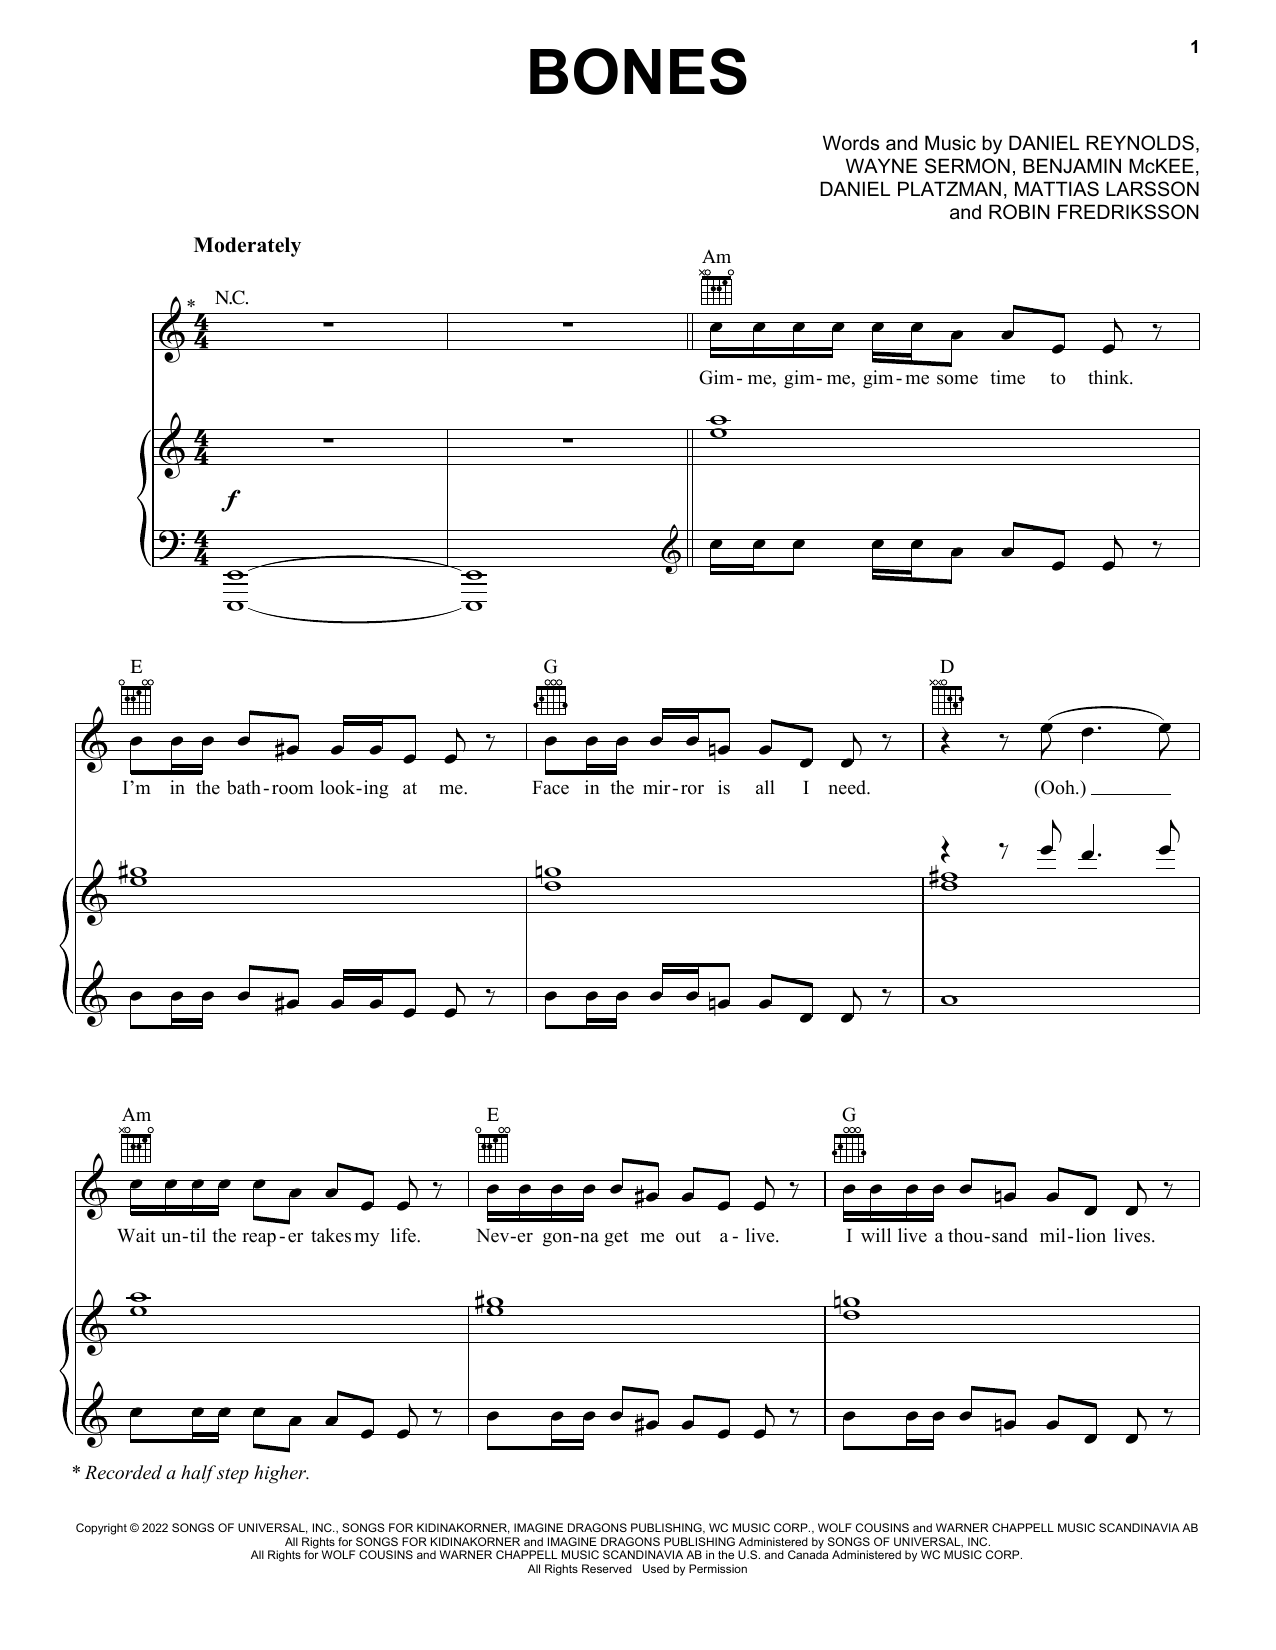 Imagine Dragons Bones sheet music notes and chords. Download Printable PDF.